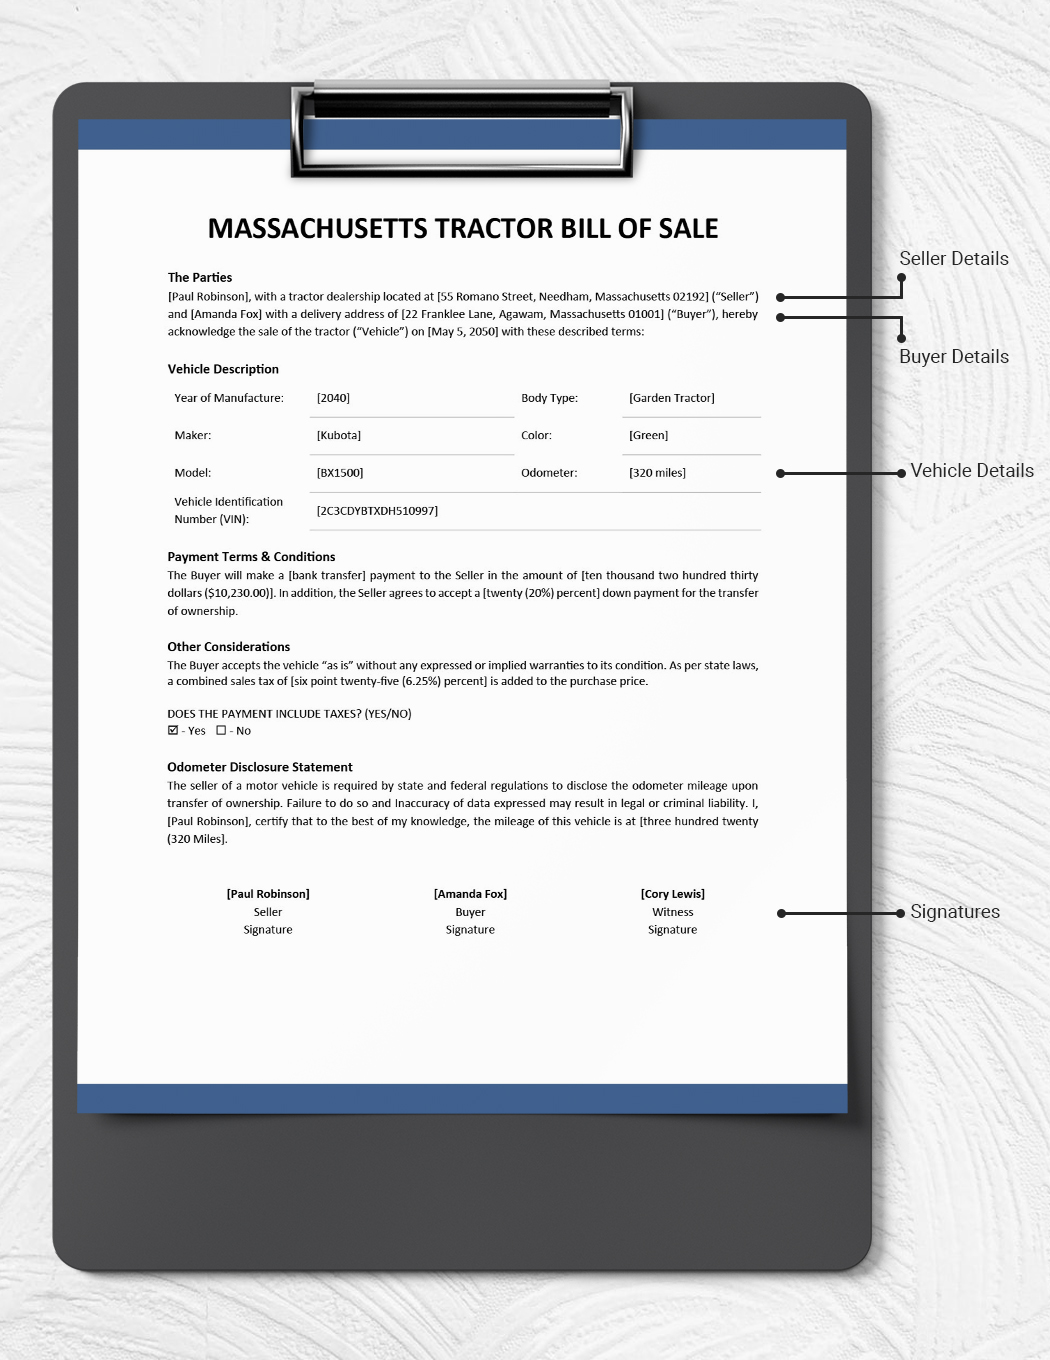 Massachusetts Tractor Bill of Sale Template